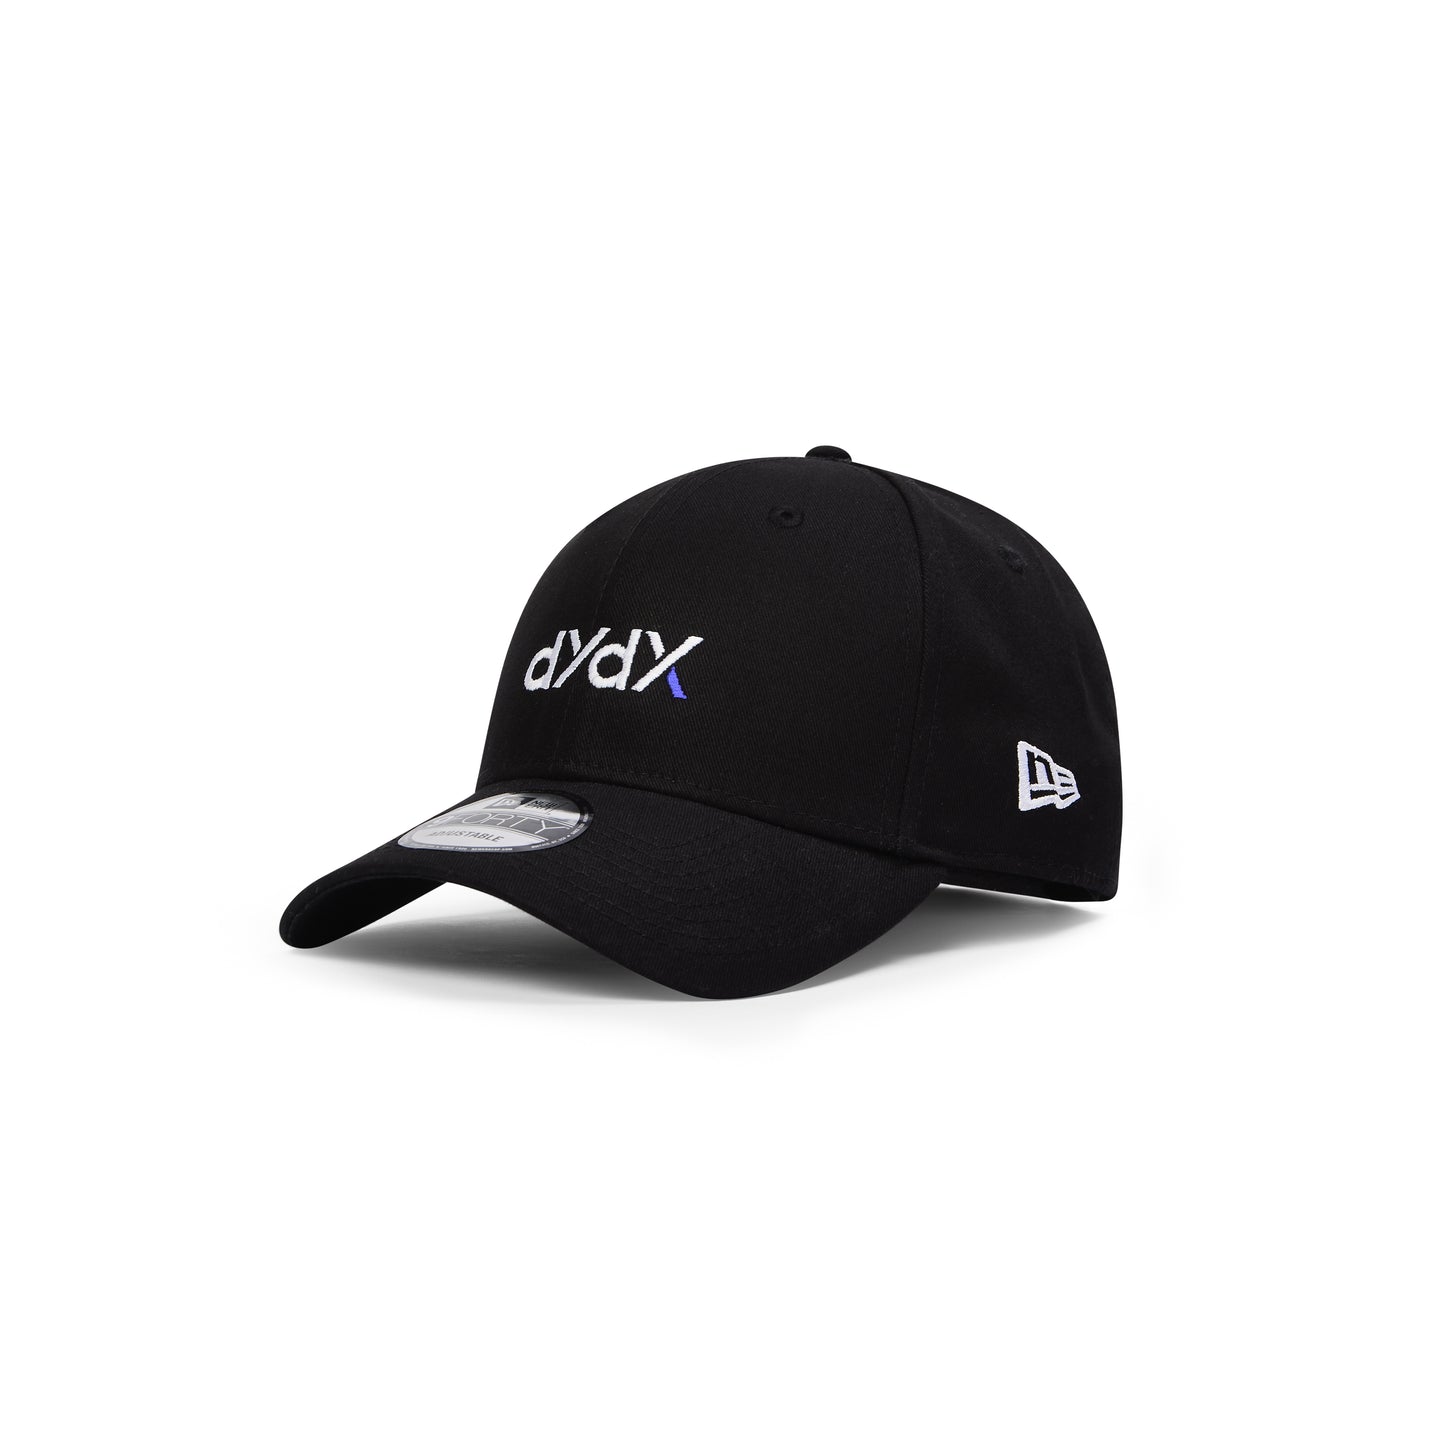 New Era dYdX Chain Cap